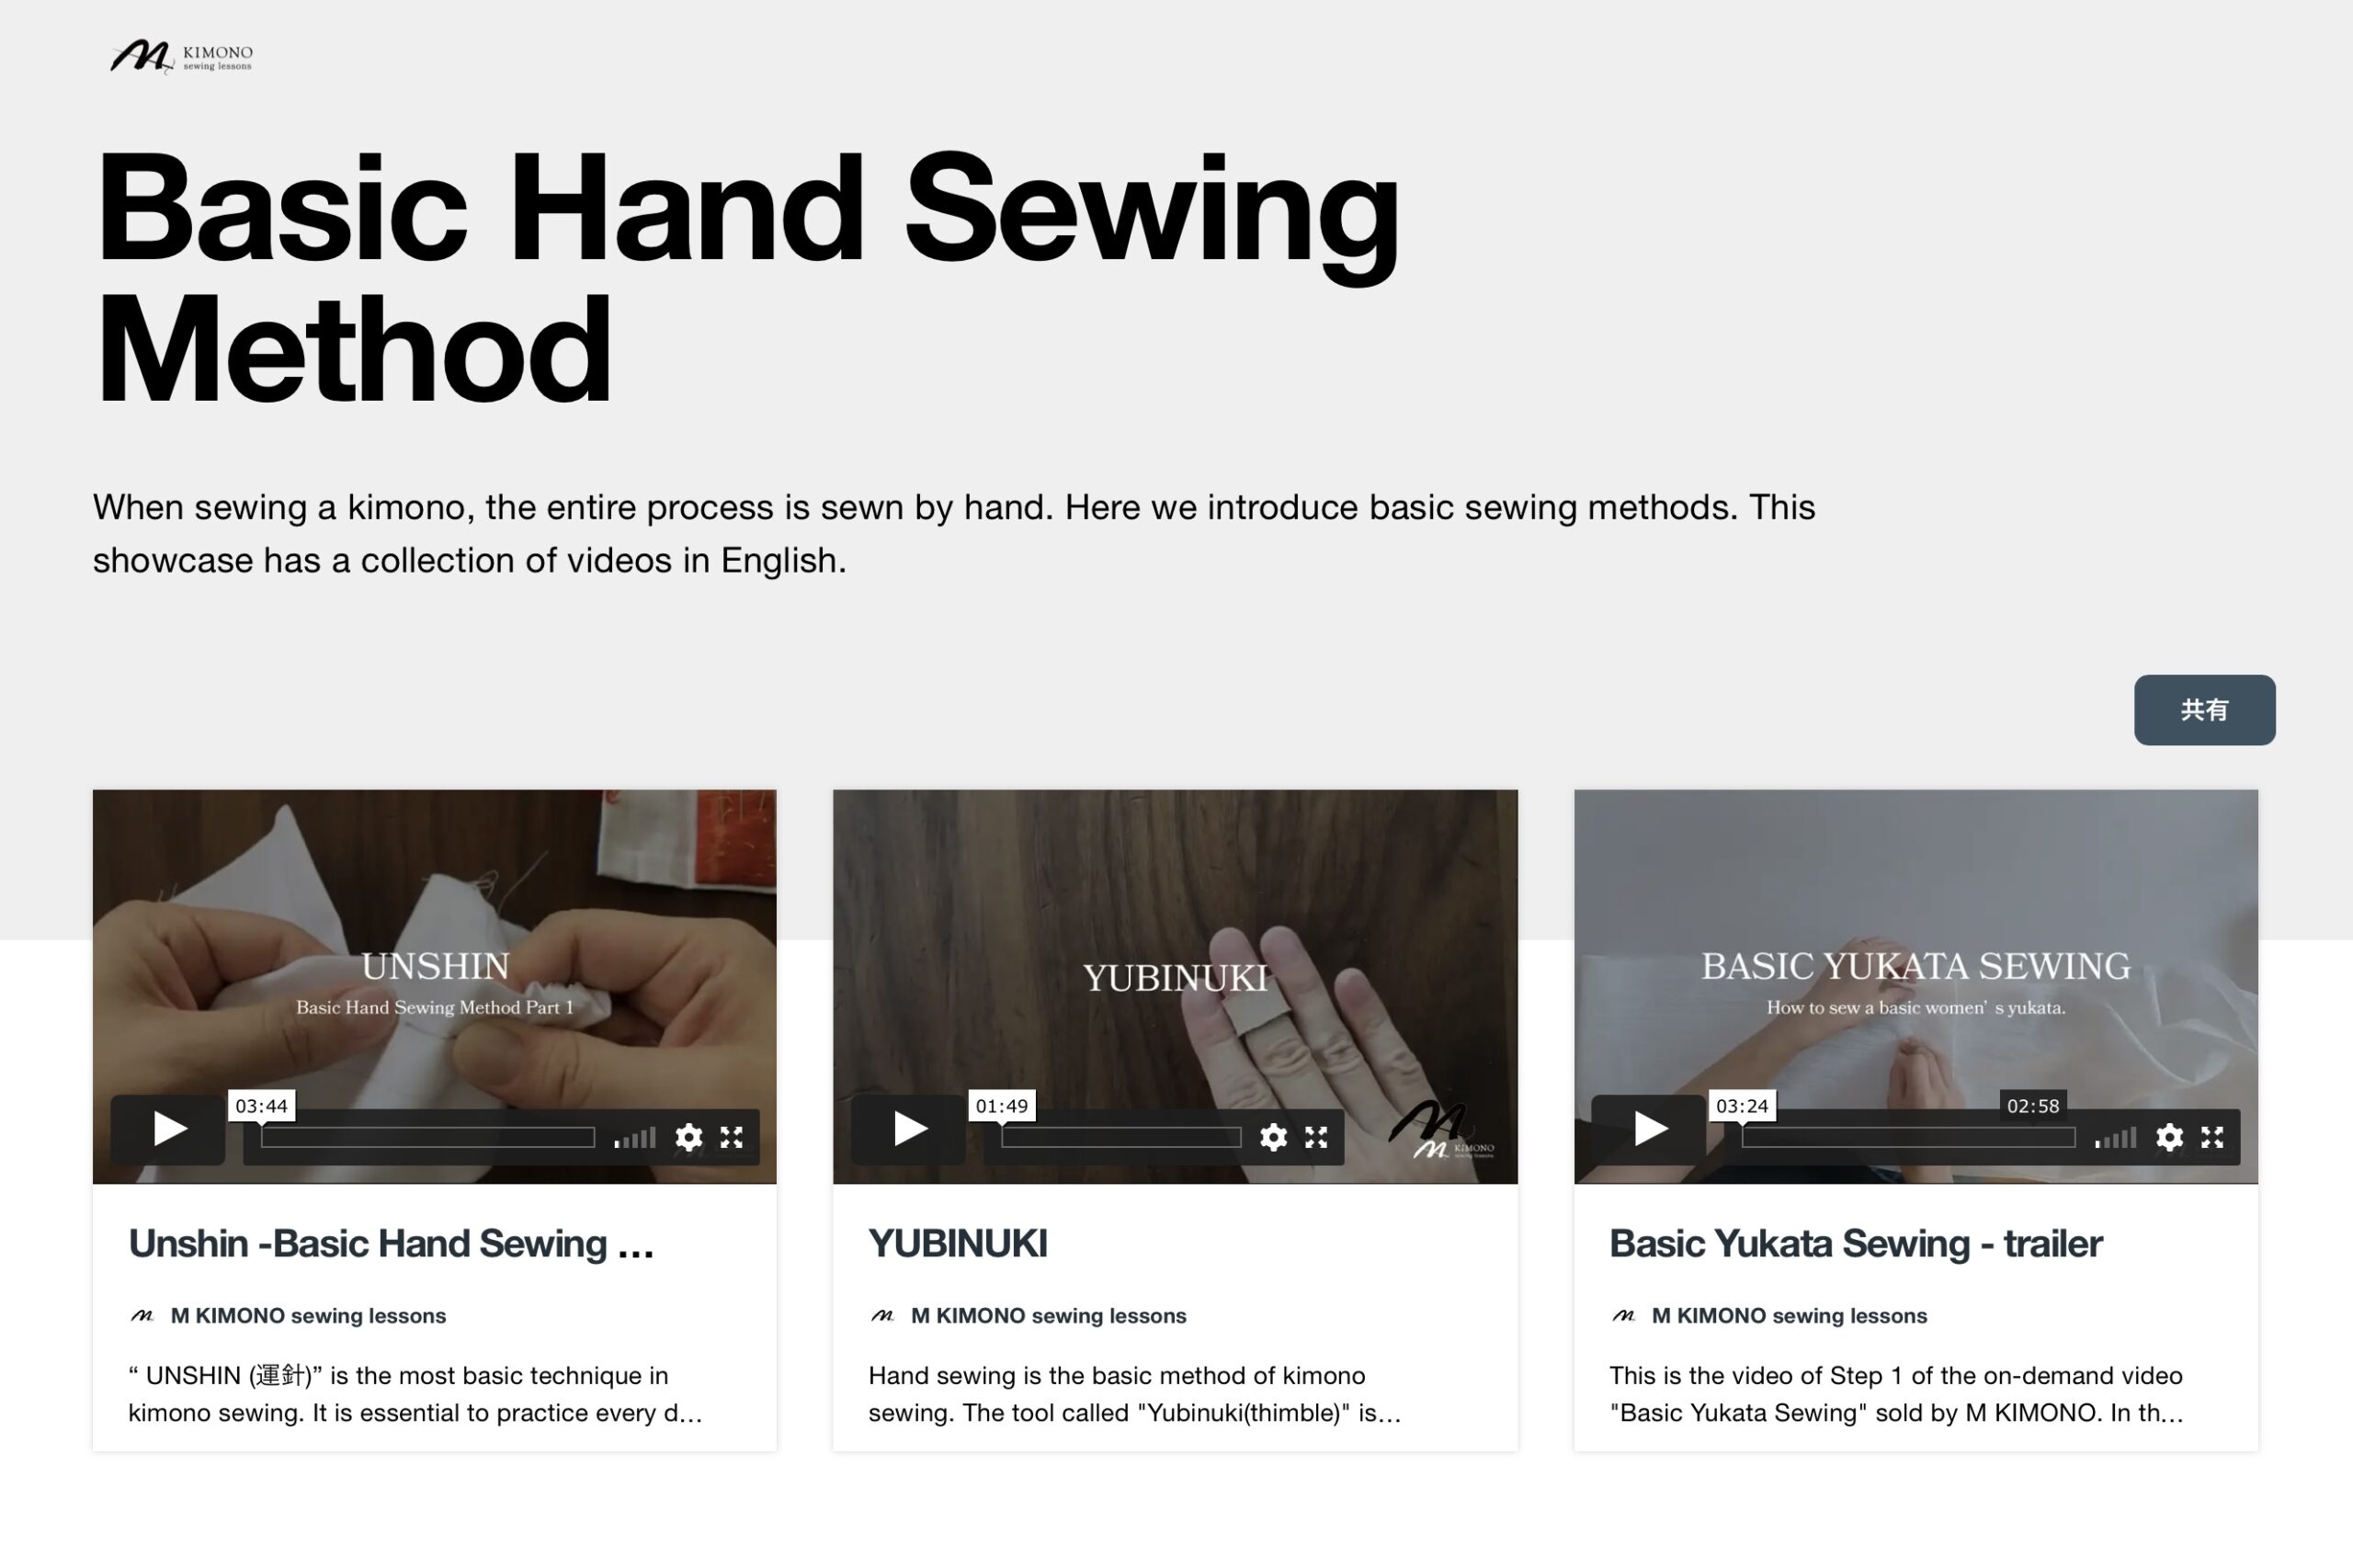 Kimono sewing video
Hand sewing
